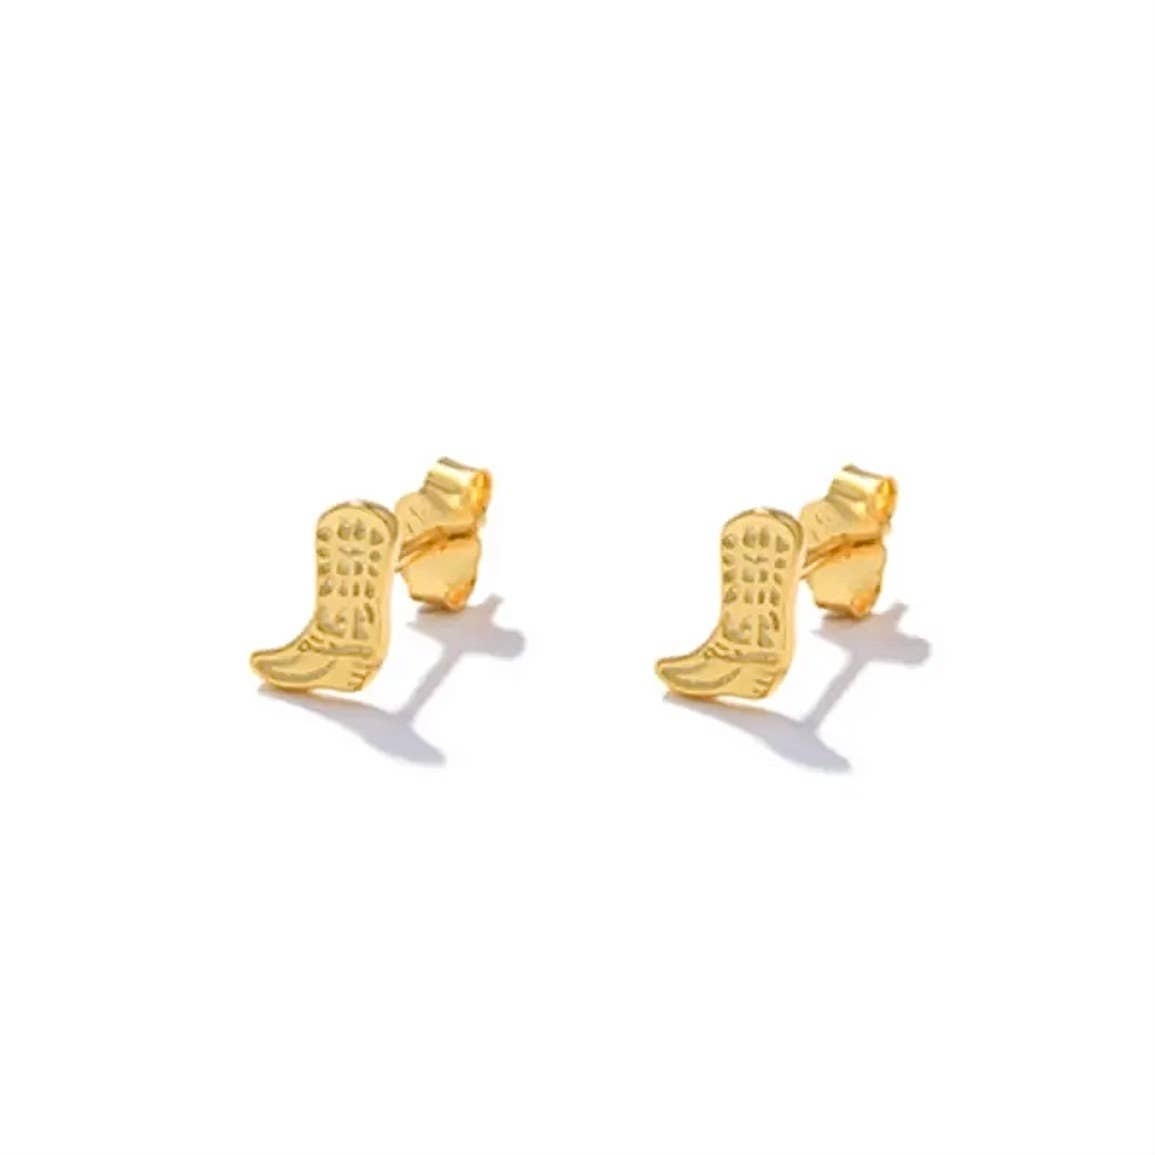 Nikki Smith Designs - Cowboy Boot Stud Earrings